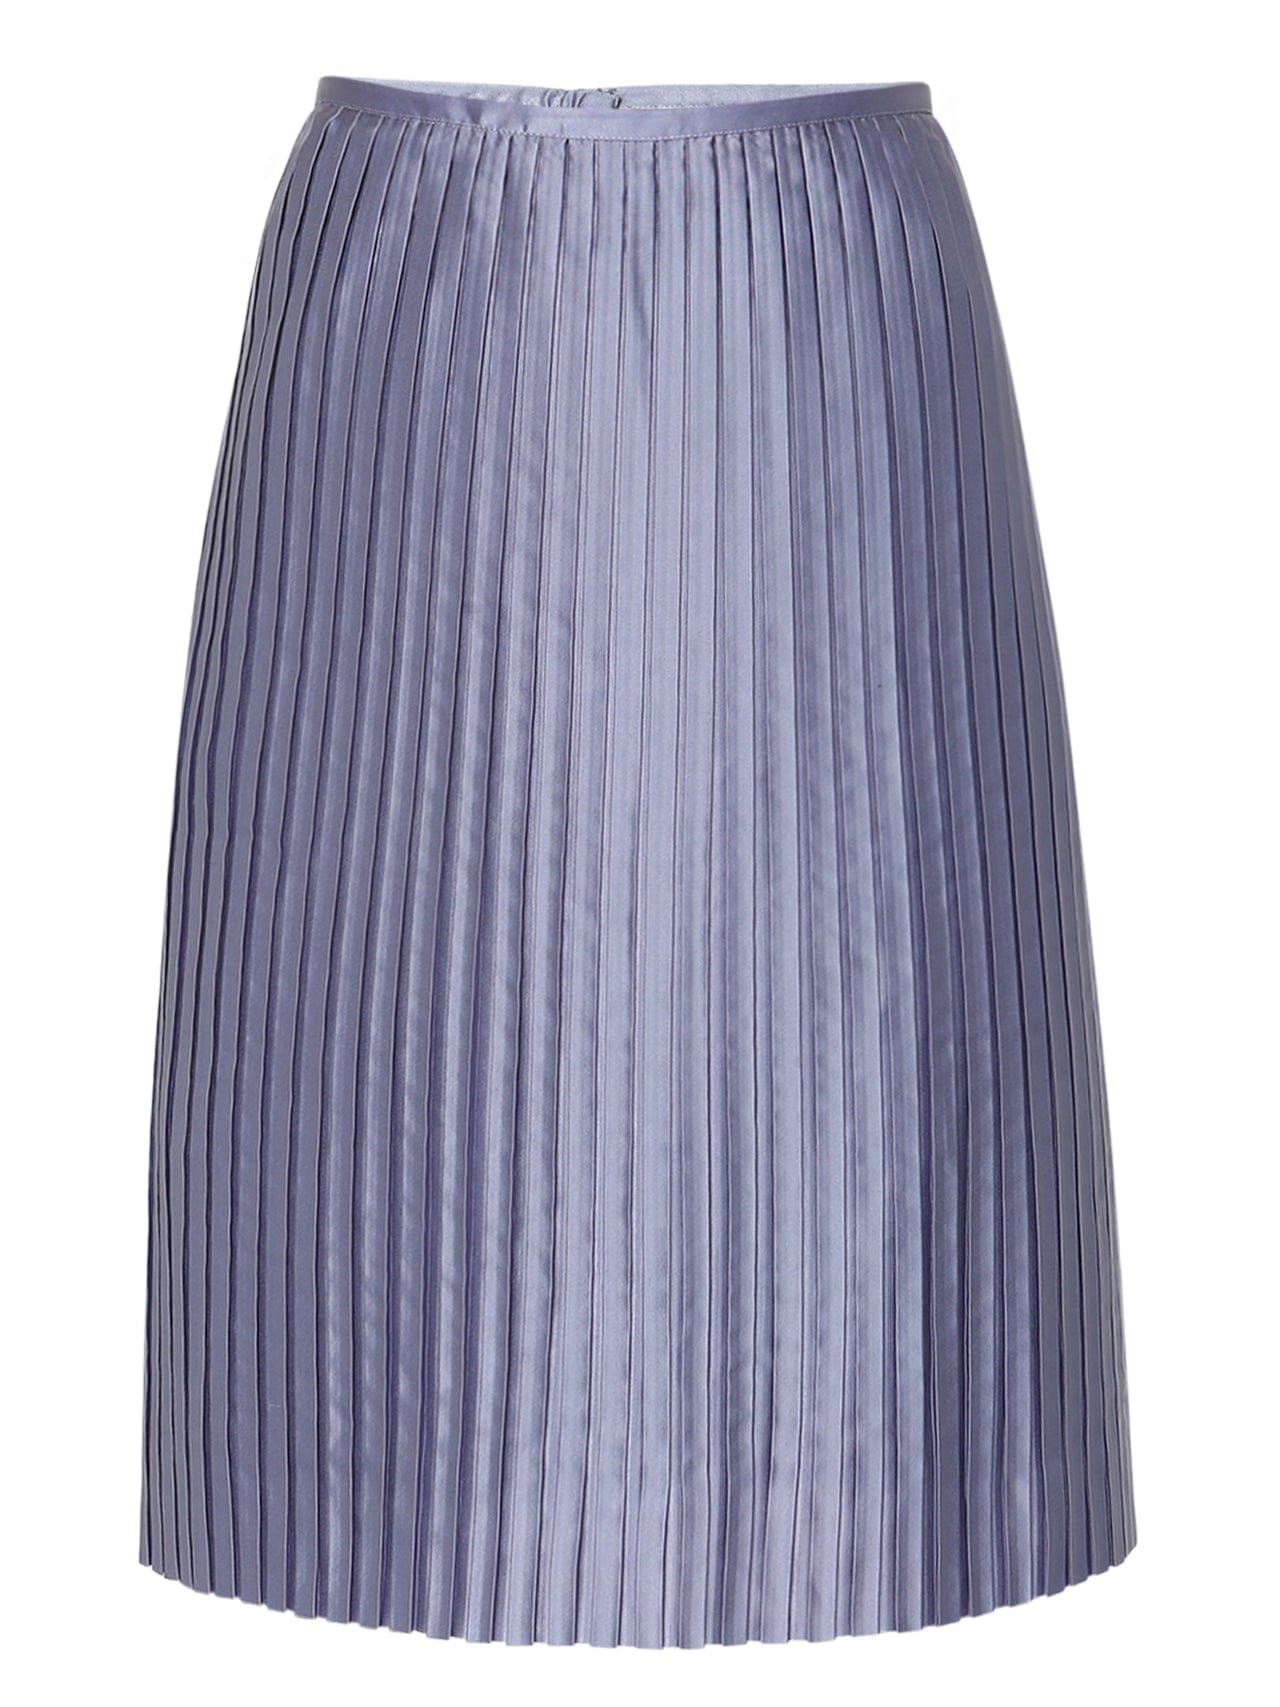 Satin Pleated Skirt - Lavender